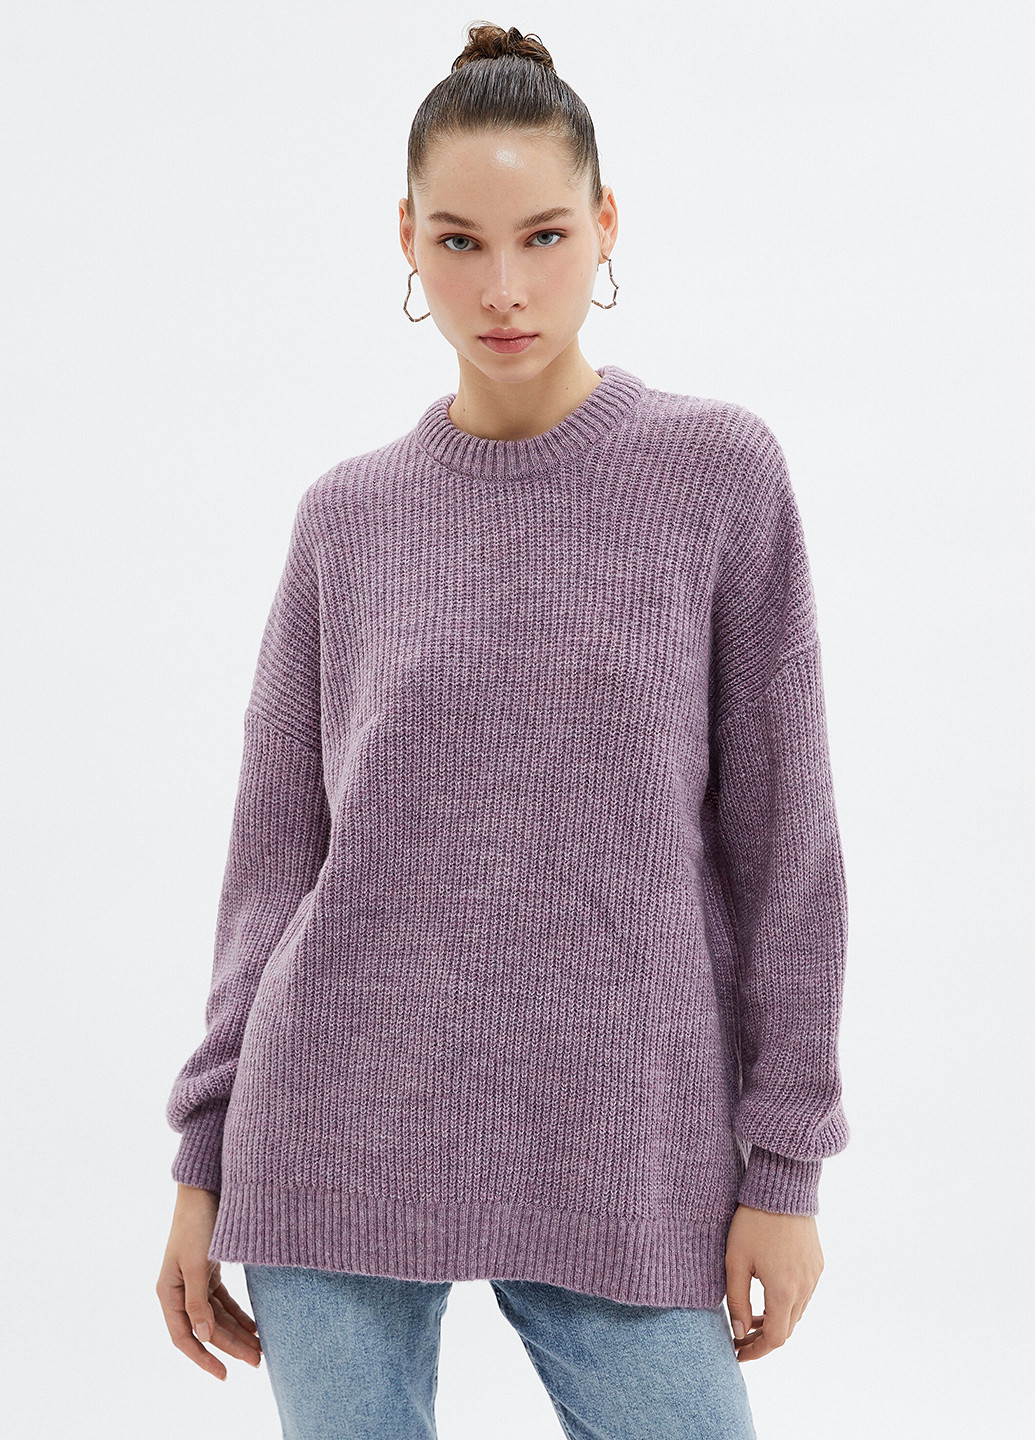 Пурпурный демисезонный свитер джемпер KOTON